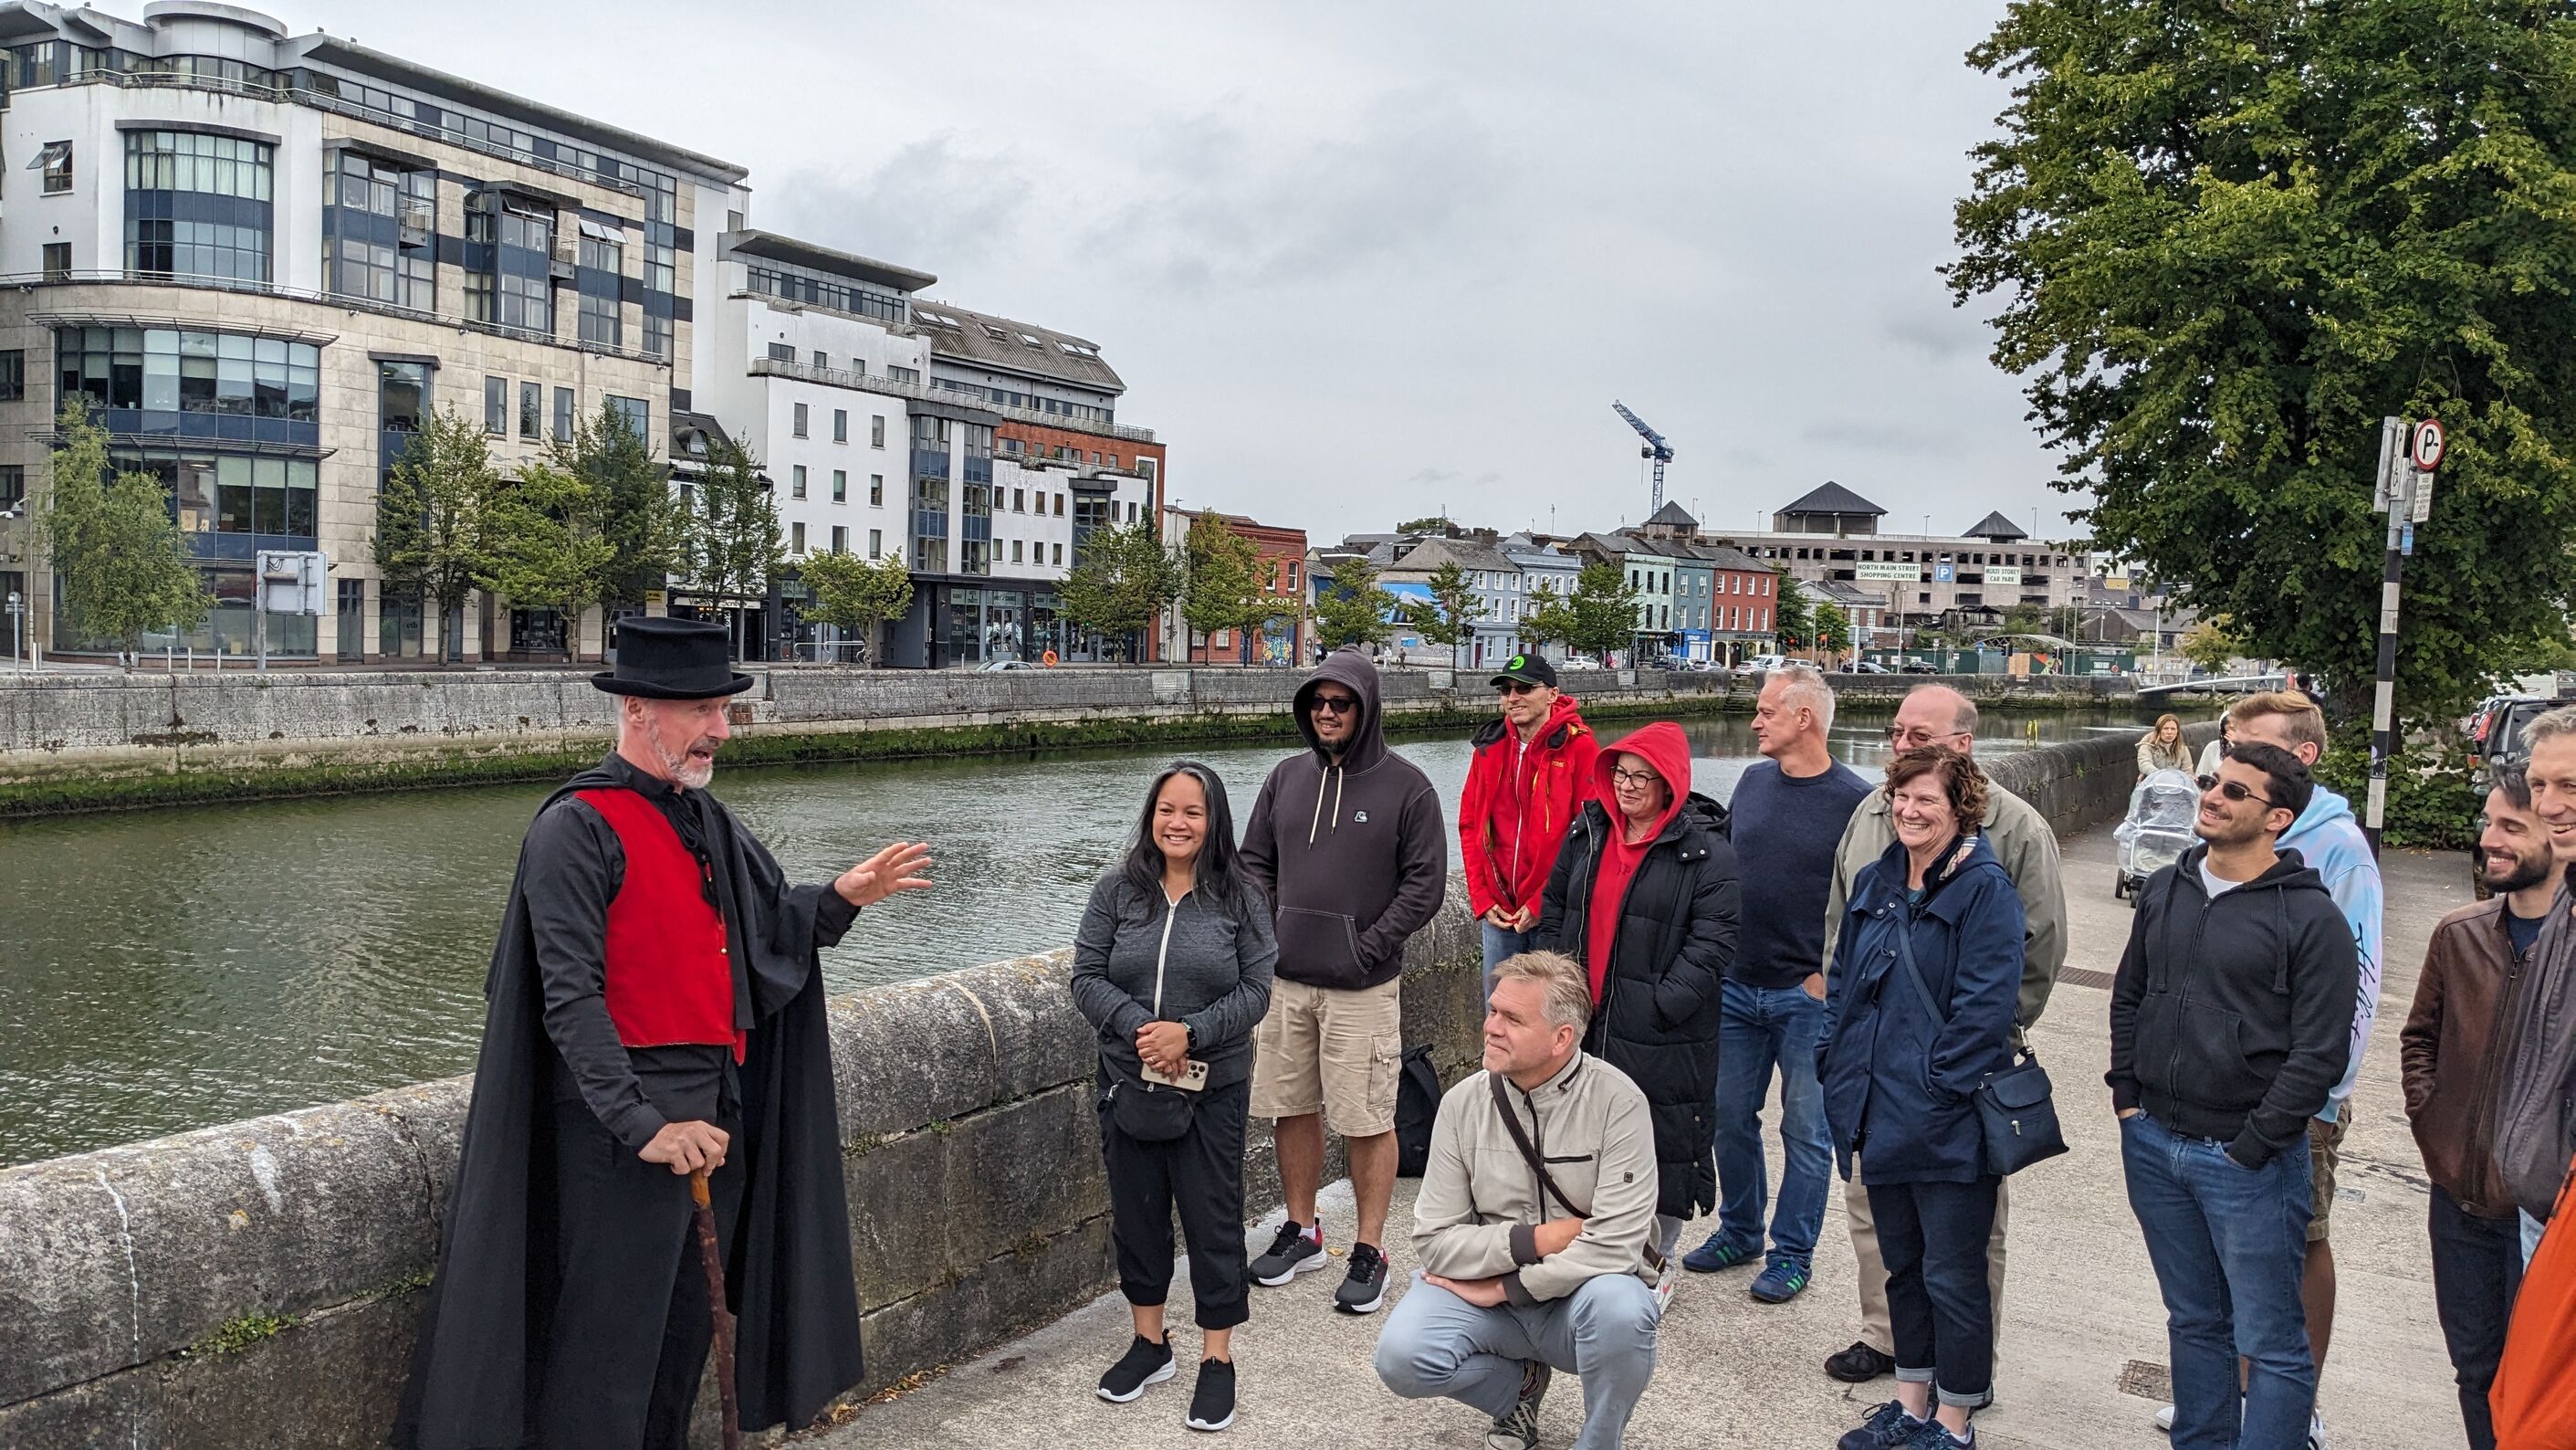 Cork city ghost tour